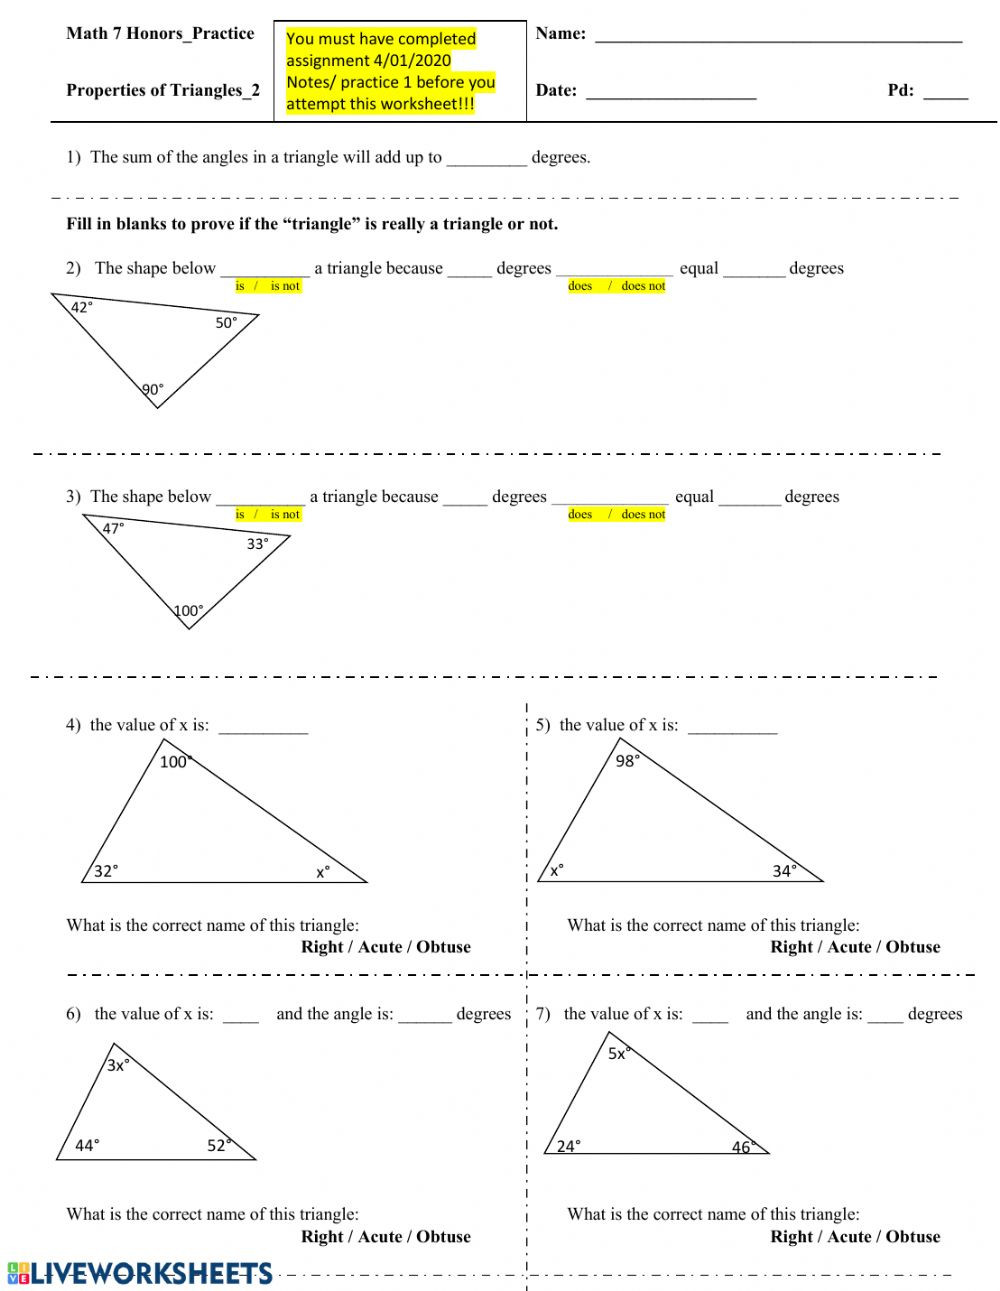 Triangle Angle Sum Worksheet Answers Triangle Basics 2 Interactive Worksheet